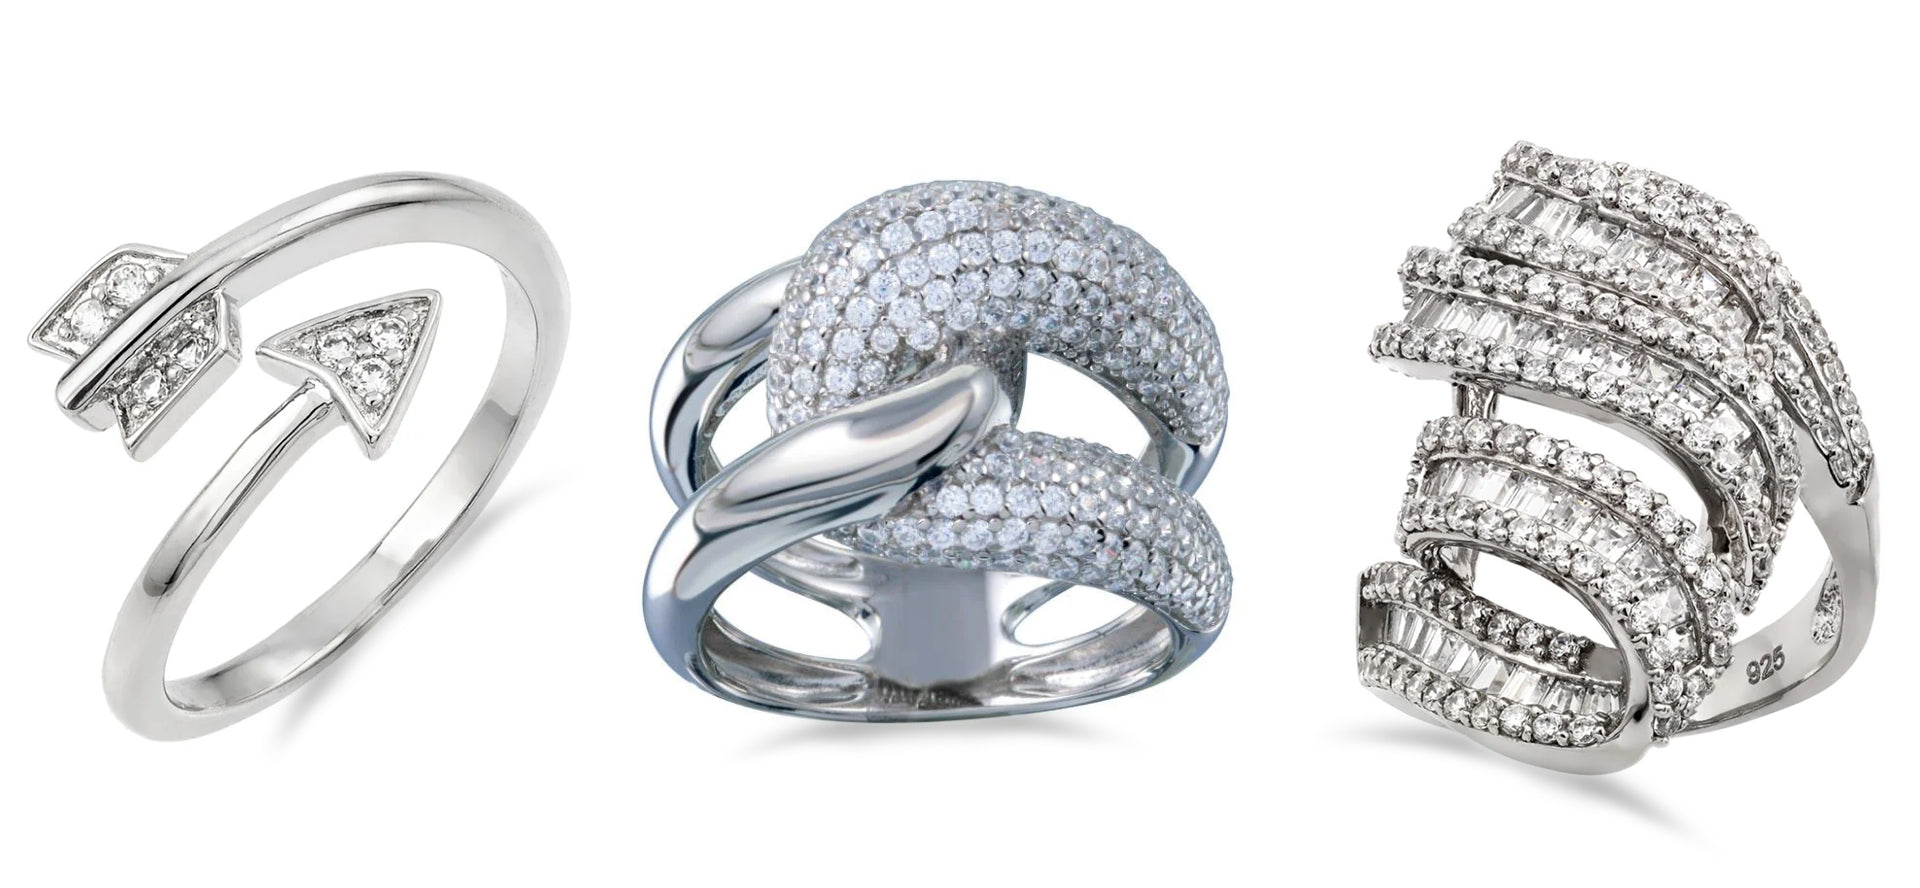 925 Silver Jewelry  Silver Bali Ball Closure Ring - 3385